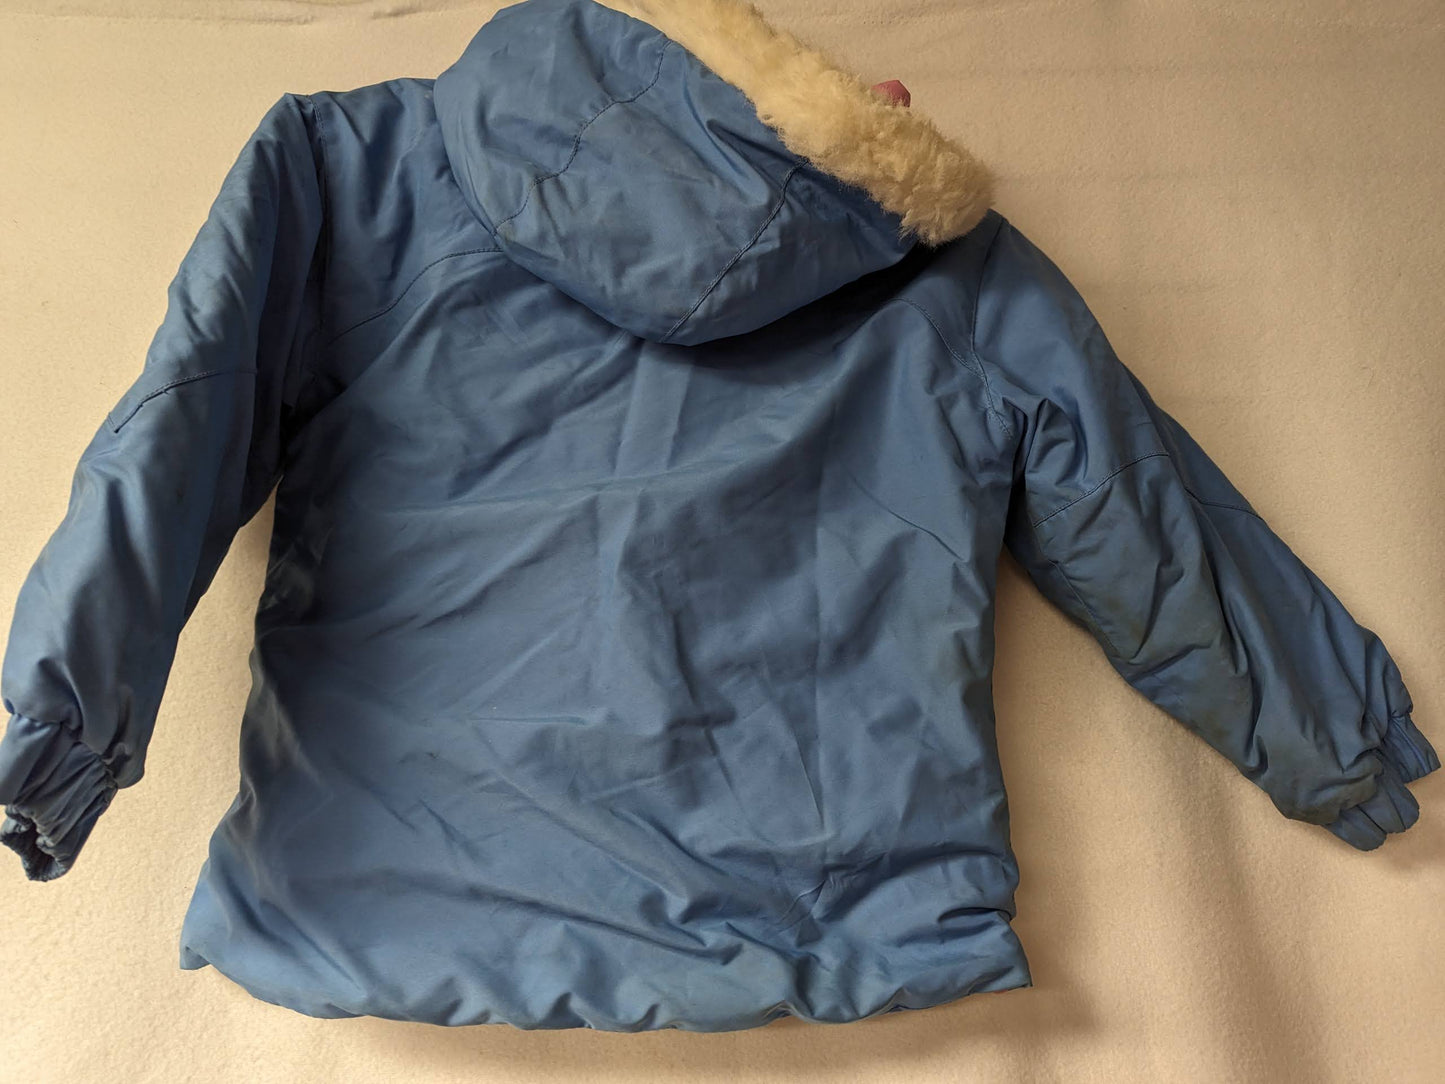 Fera Youth Hooded Ski/Snowboard Jacket Coat Size Youth Medium (K5) Color Blue Condition Used